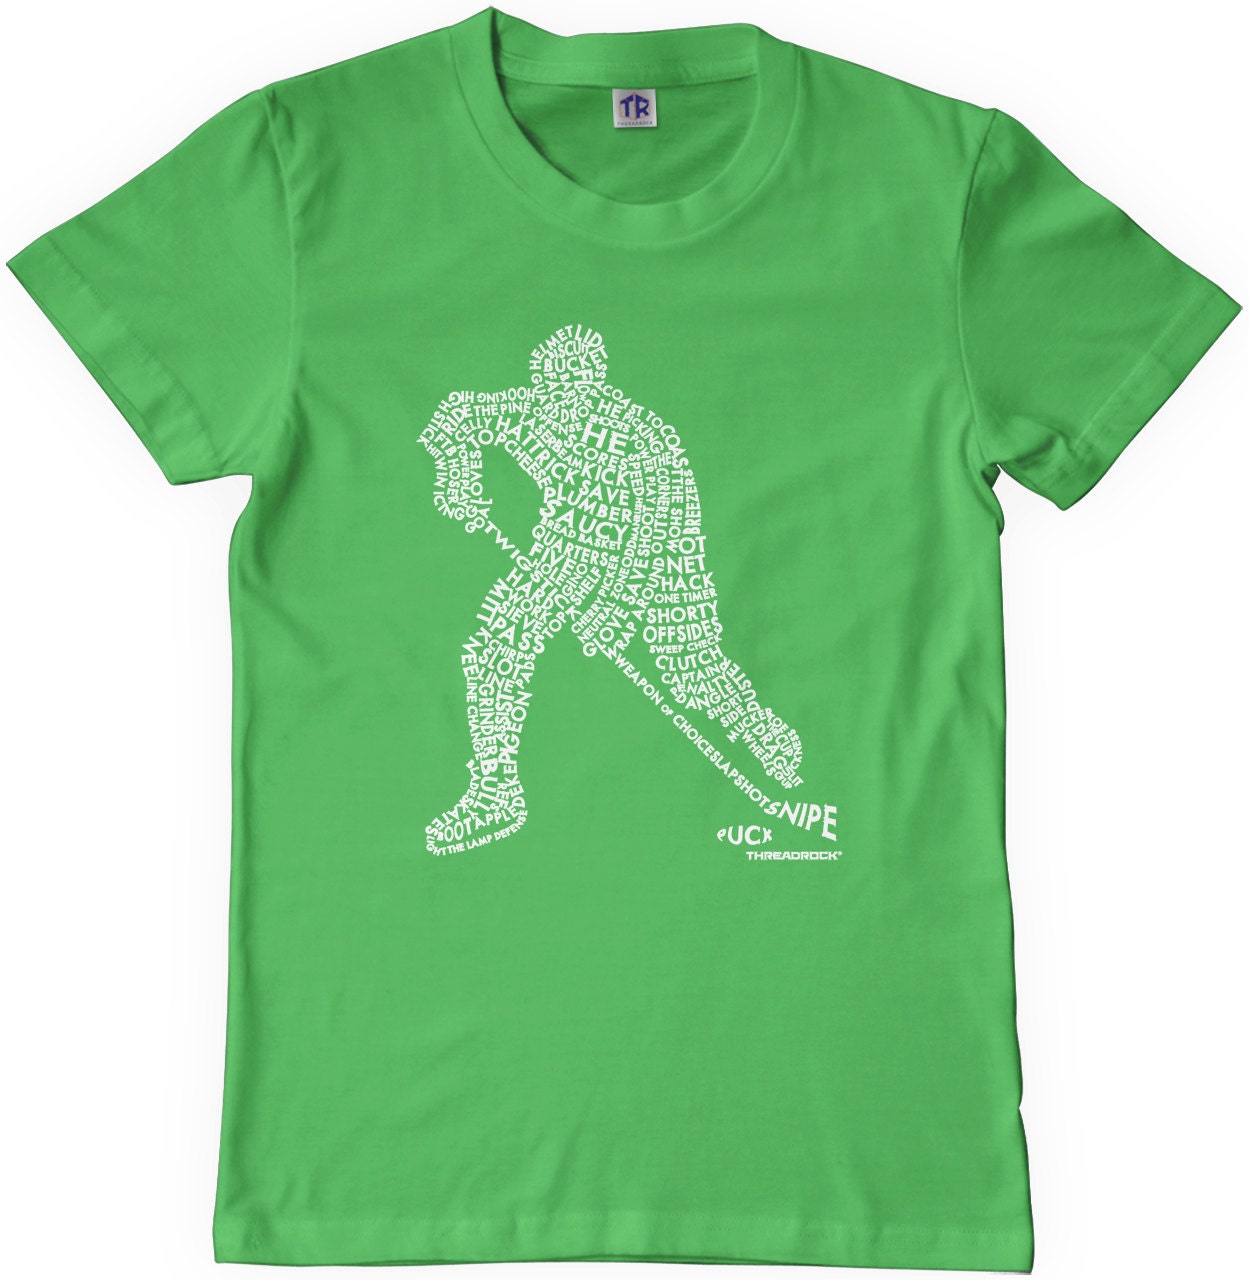 Hockey Kit T-Shirt Design Vector – ThreadBasket